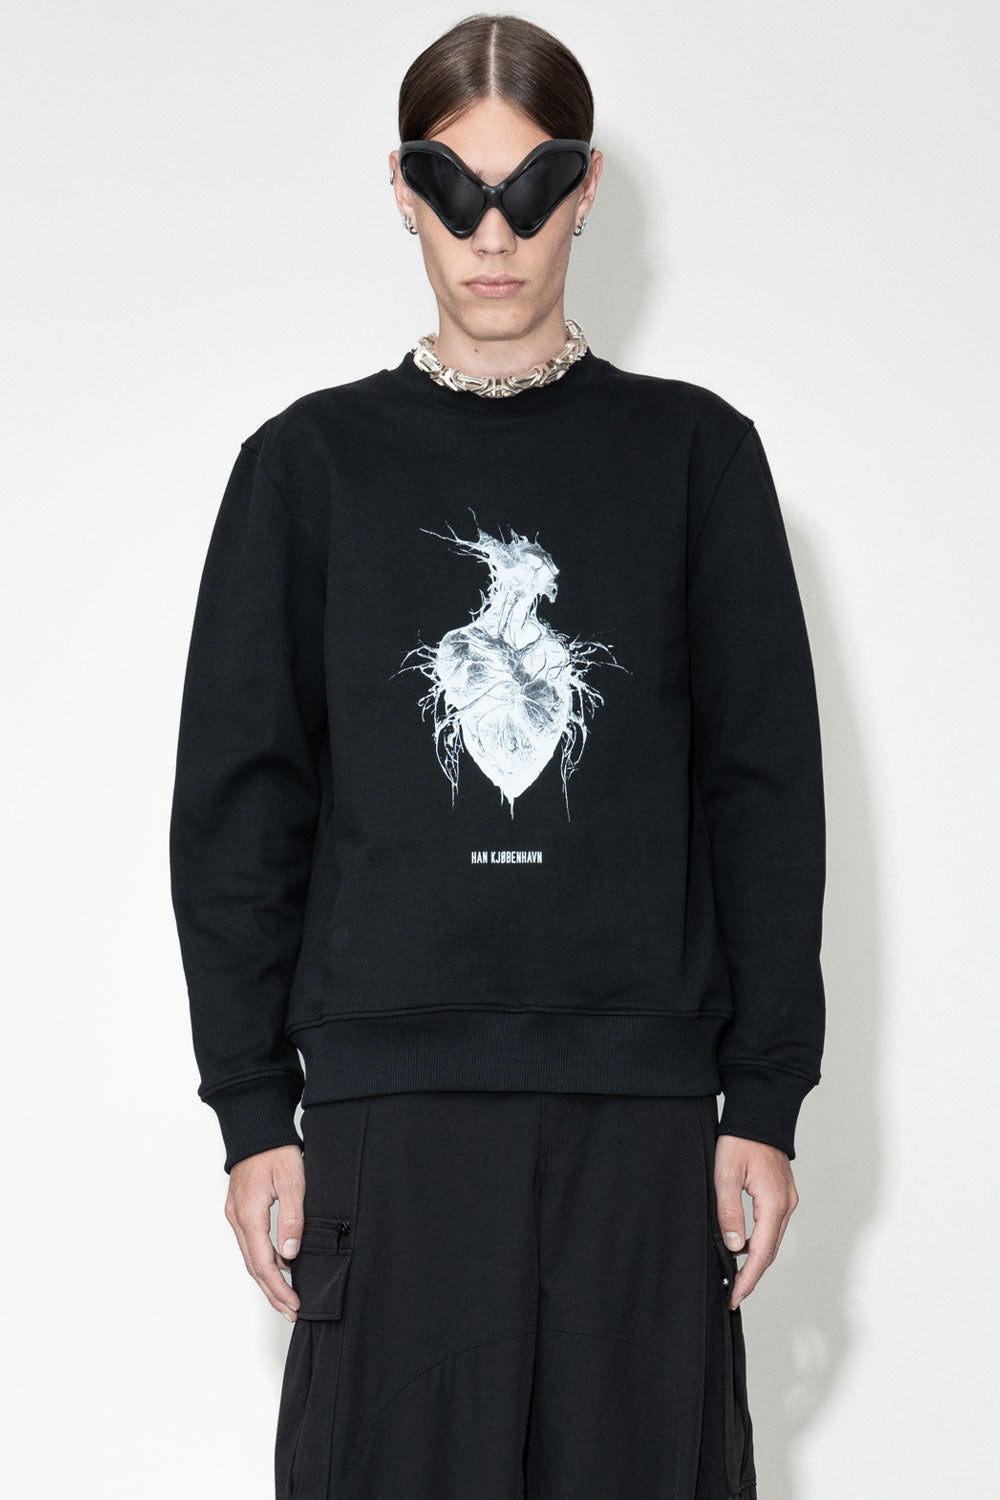 Buy the Han Kjobenhavn Heart Monster Regular Crewneck Sweatshirt in Black at Intro. Spend £50 for free UK delivery. Official stockists. We ship worldwide.